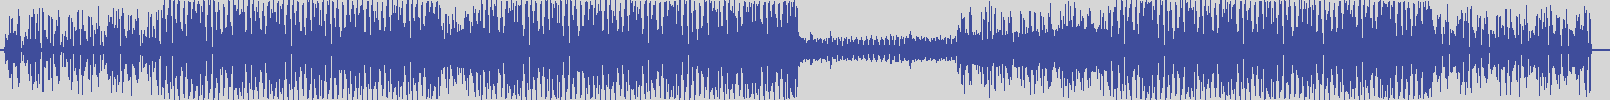 nf_boyz_records [NFY082] Kreeze - Girls Flashing [Seduction Mix] audio wave form